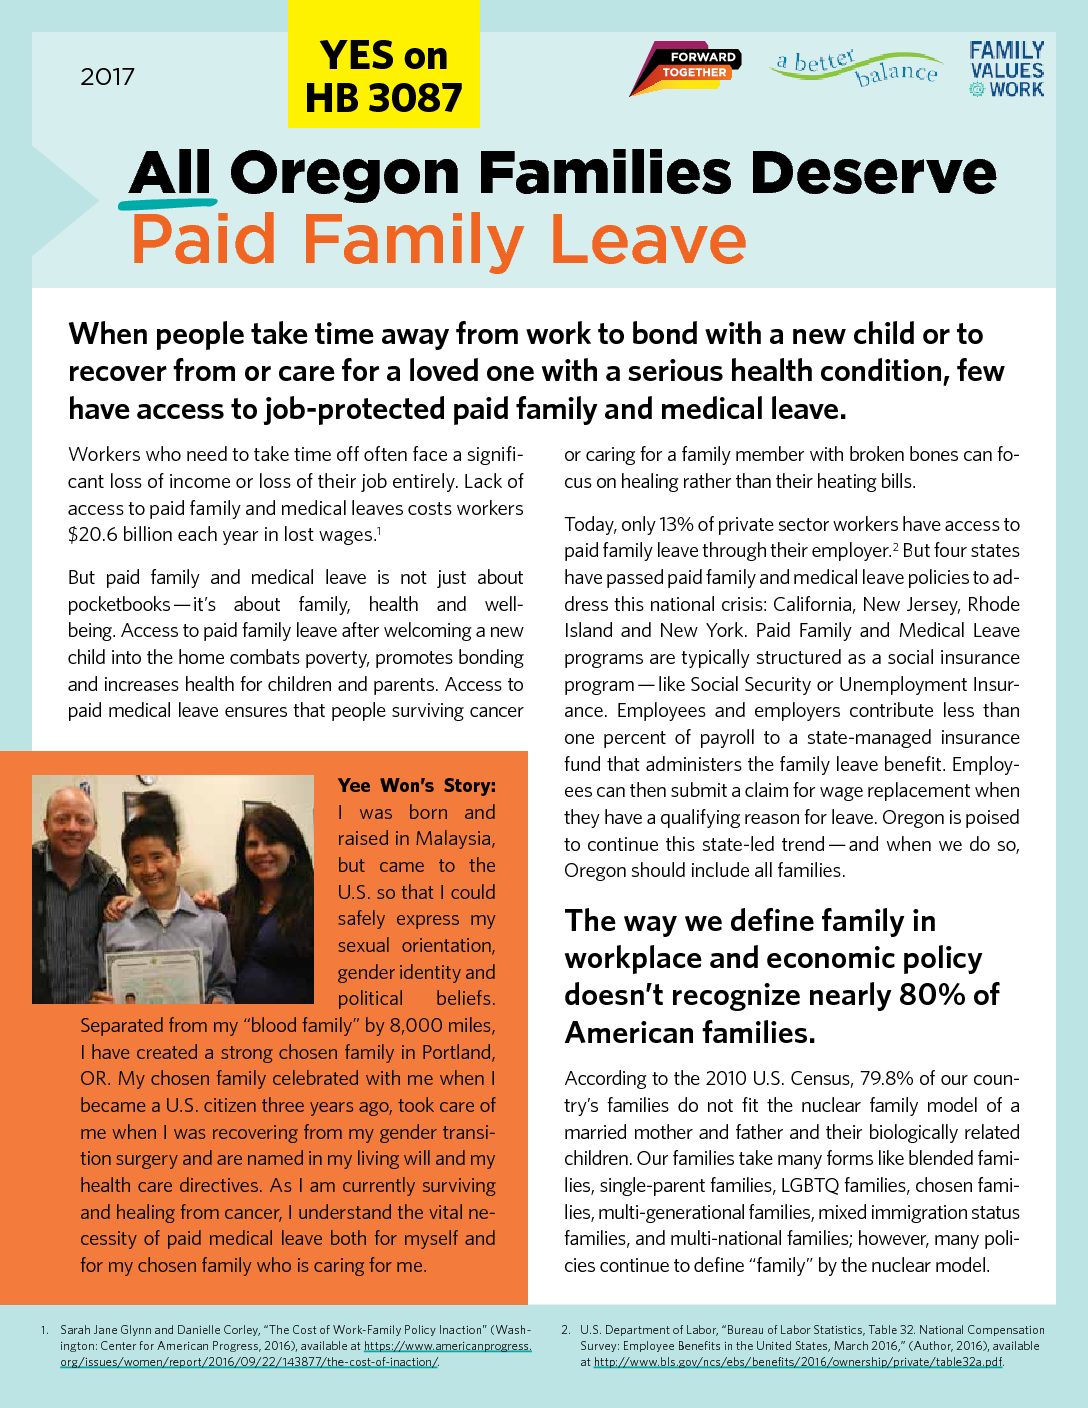 All Oregon Families Deserve Paid Family Leave